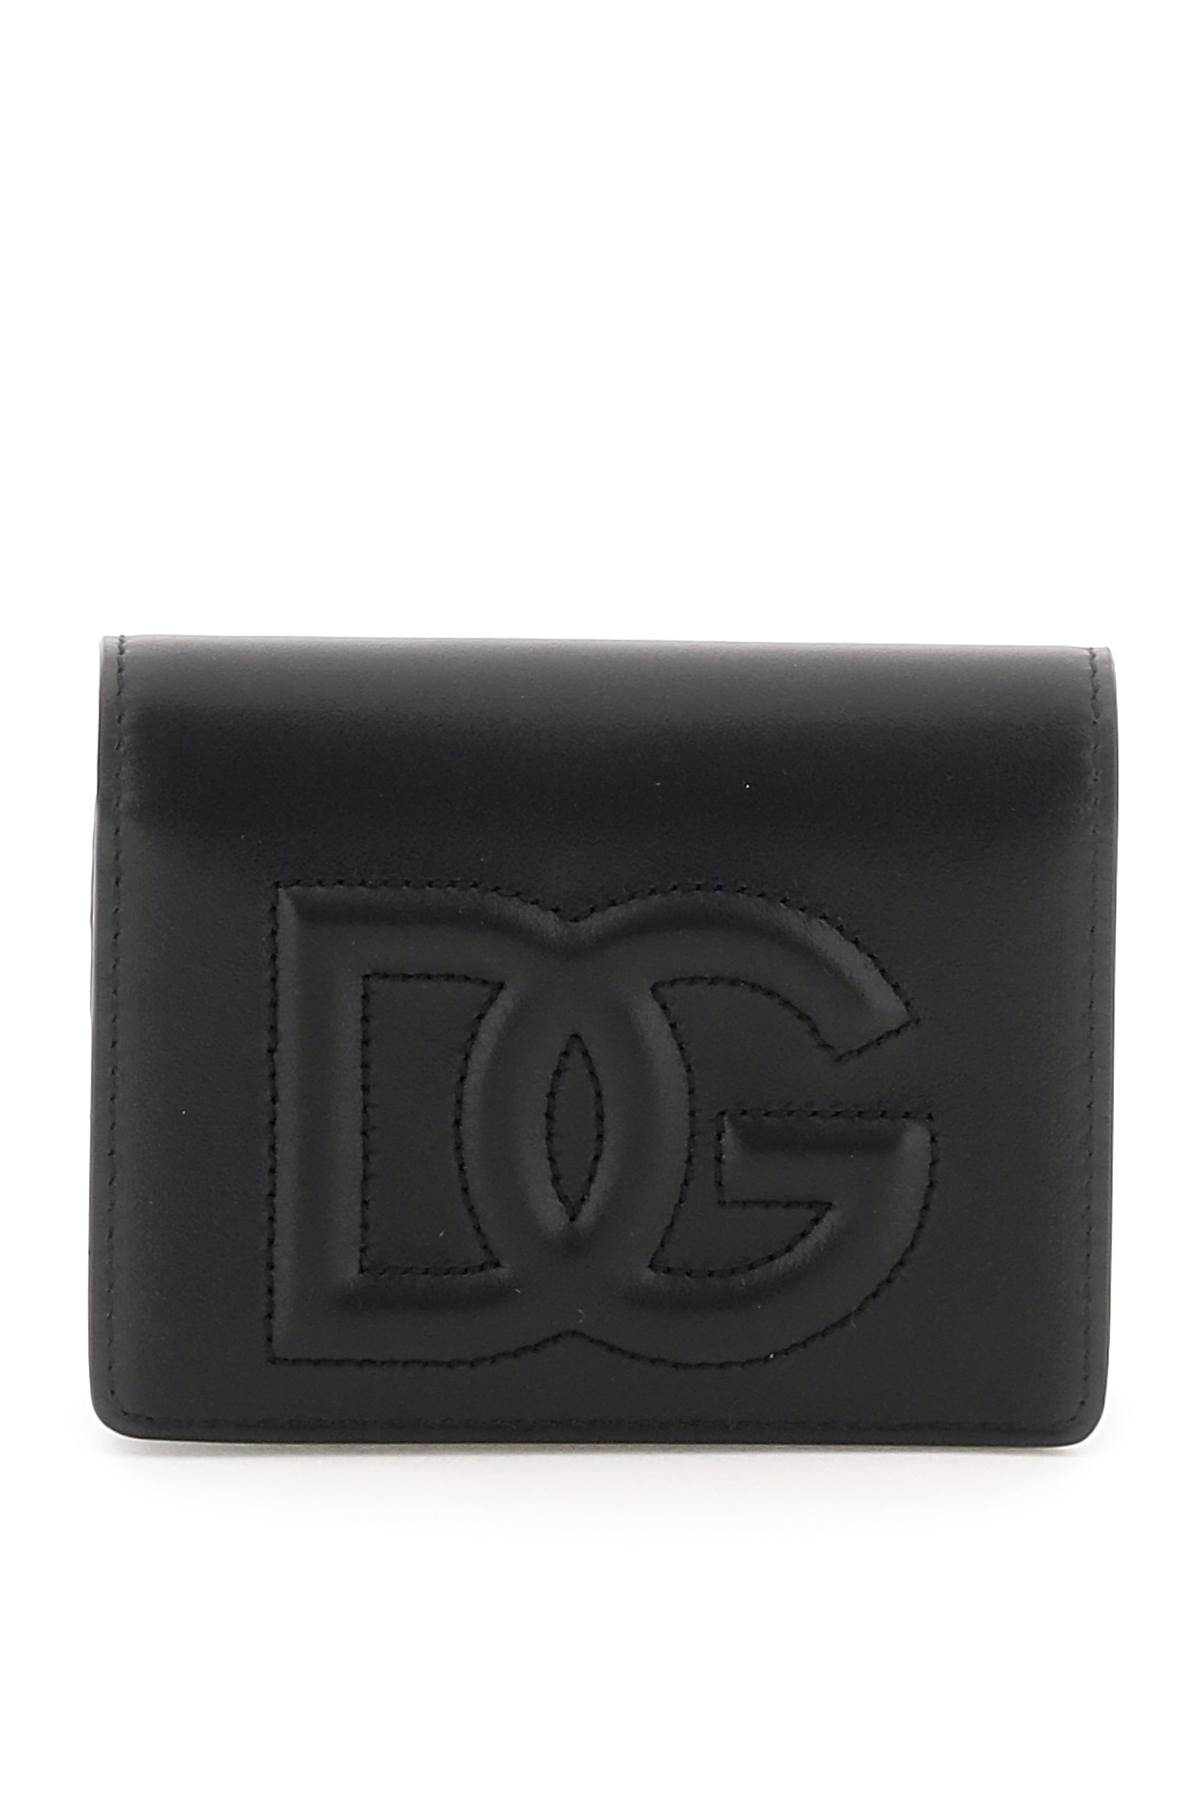 Dolce & Gabbana Logoed Wallet